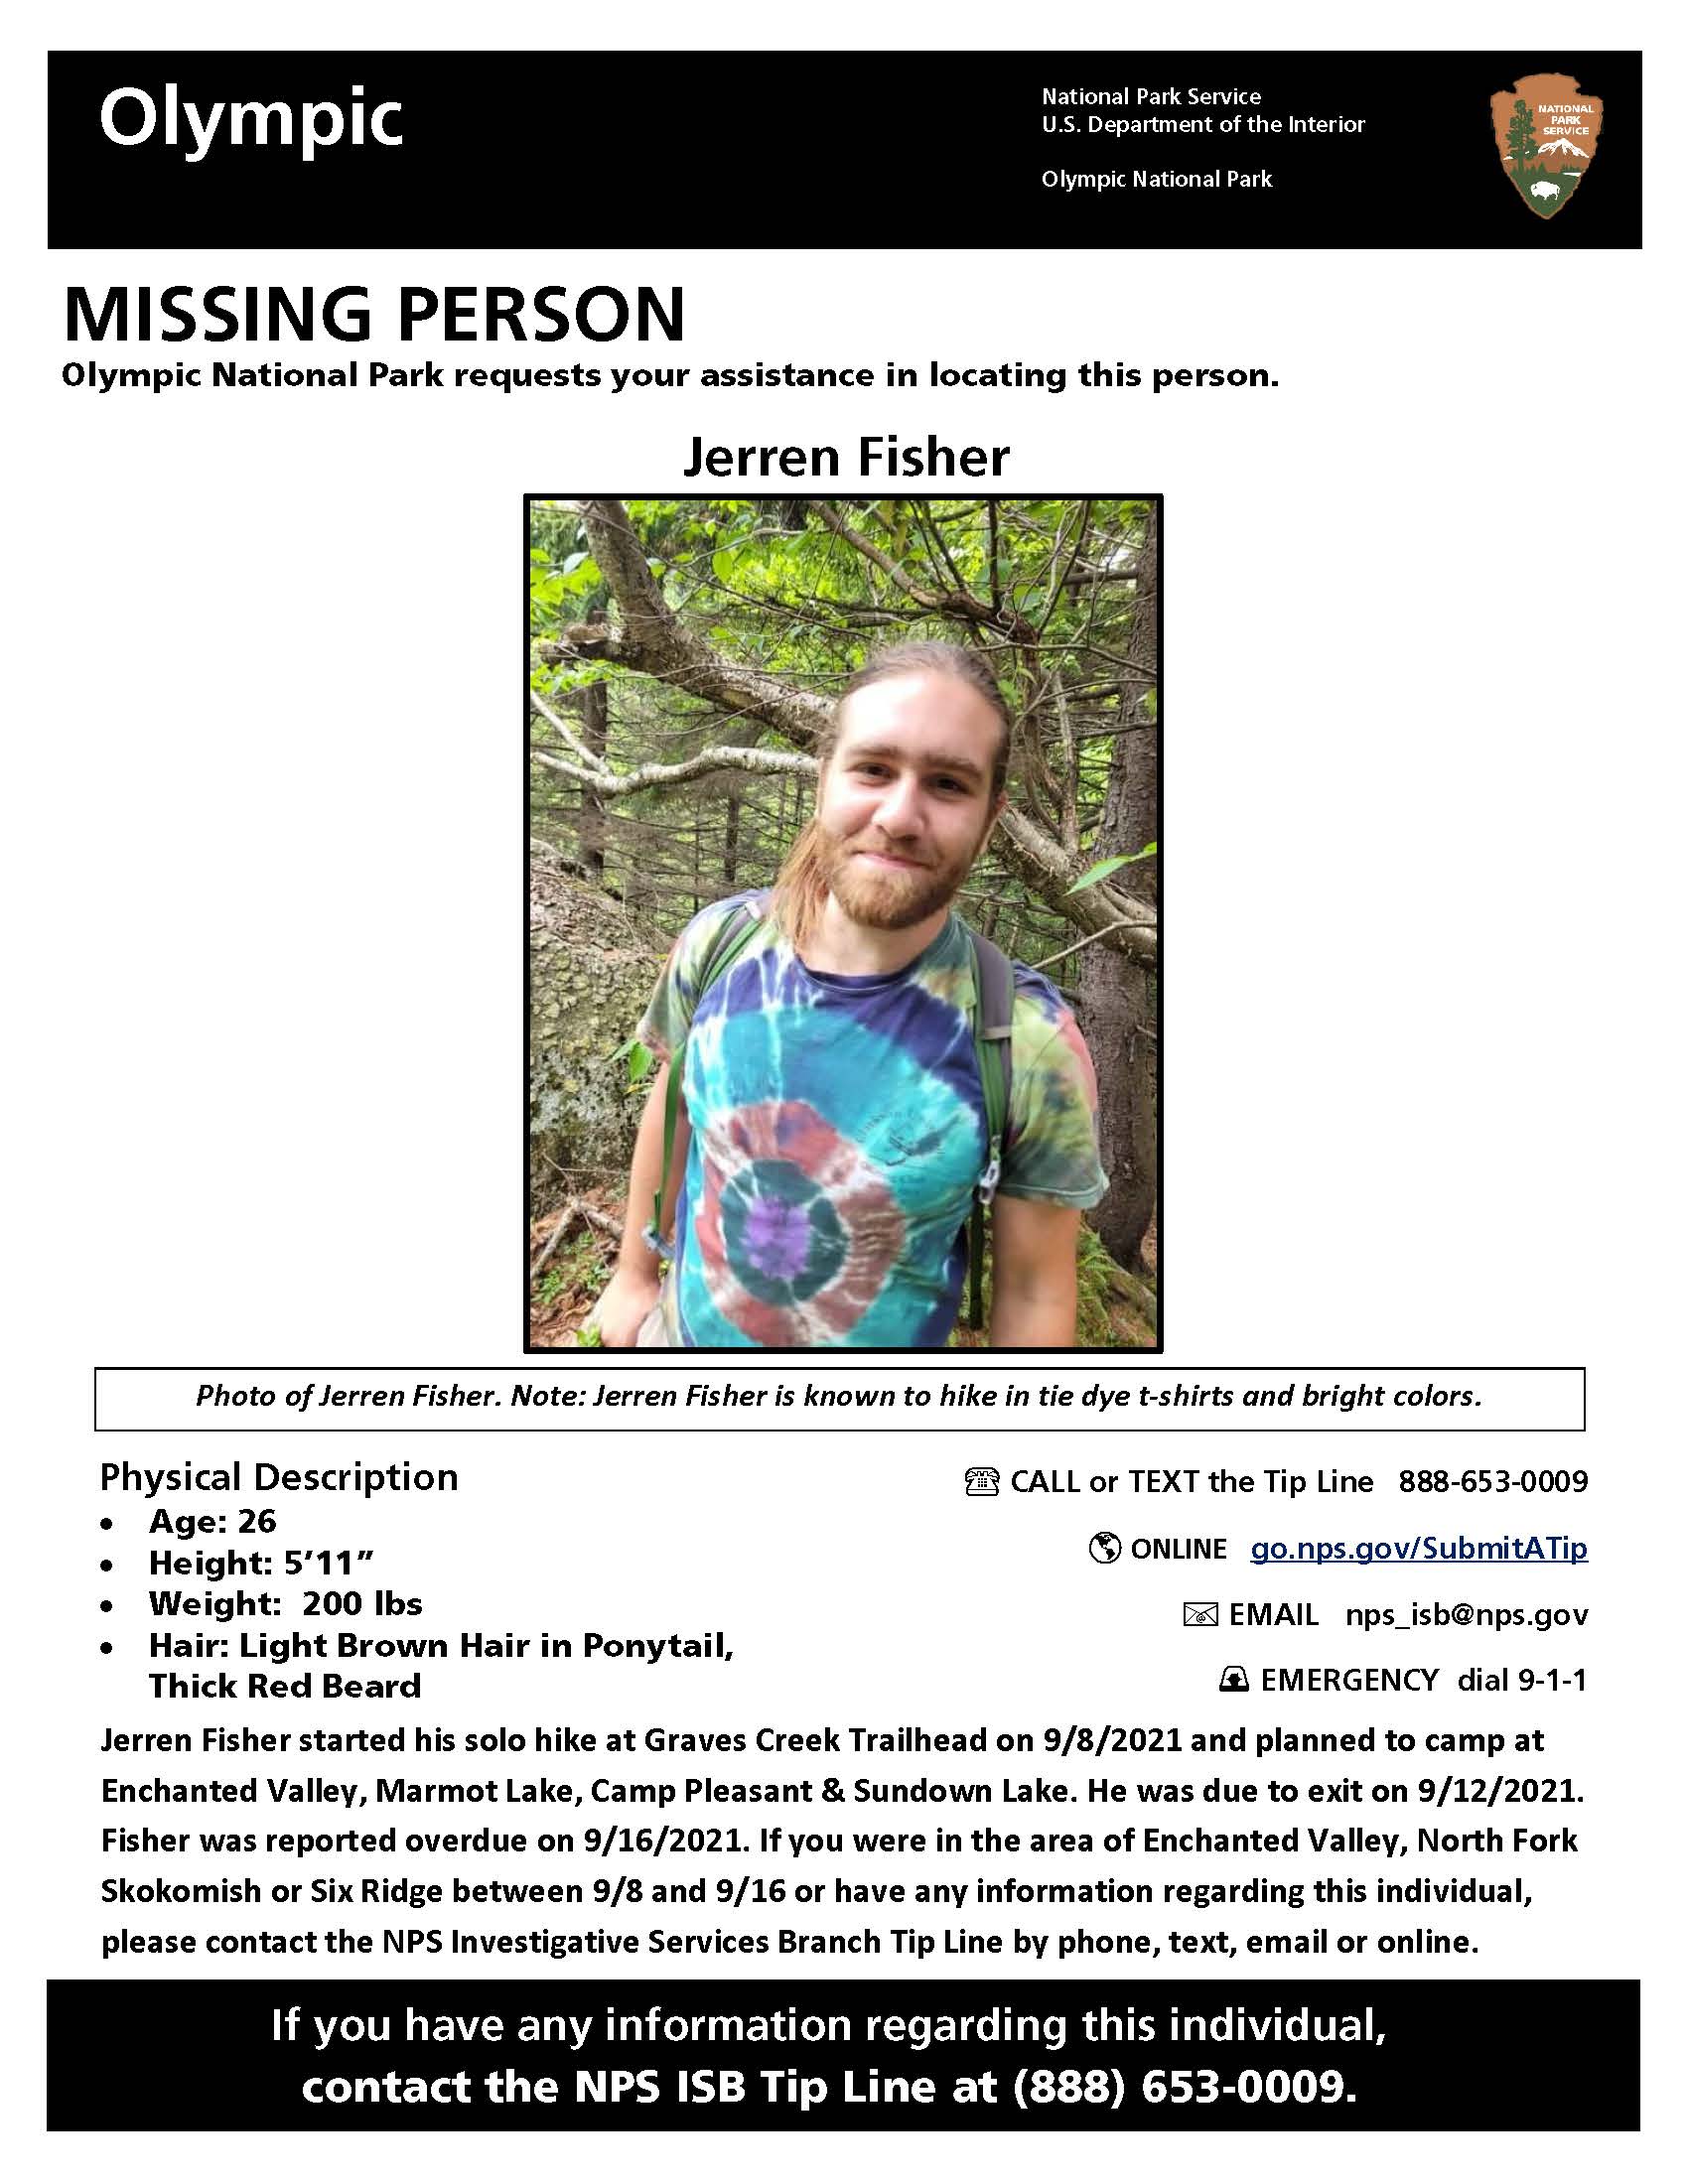 Missing person flyer for Jerren Fisher